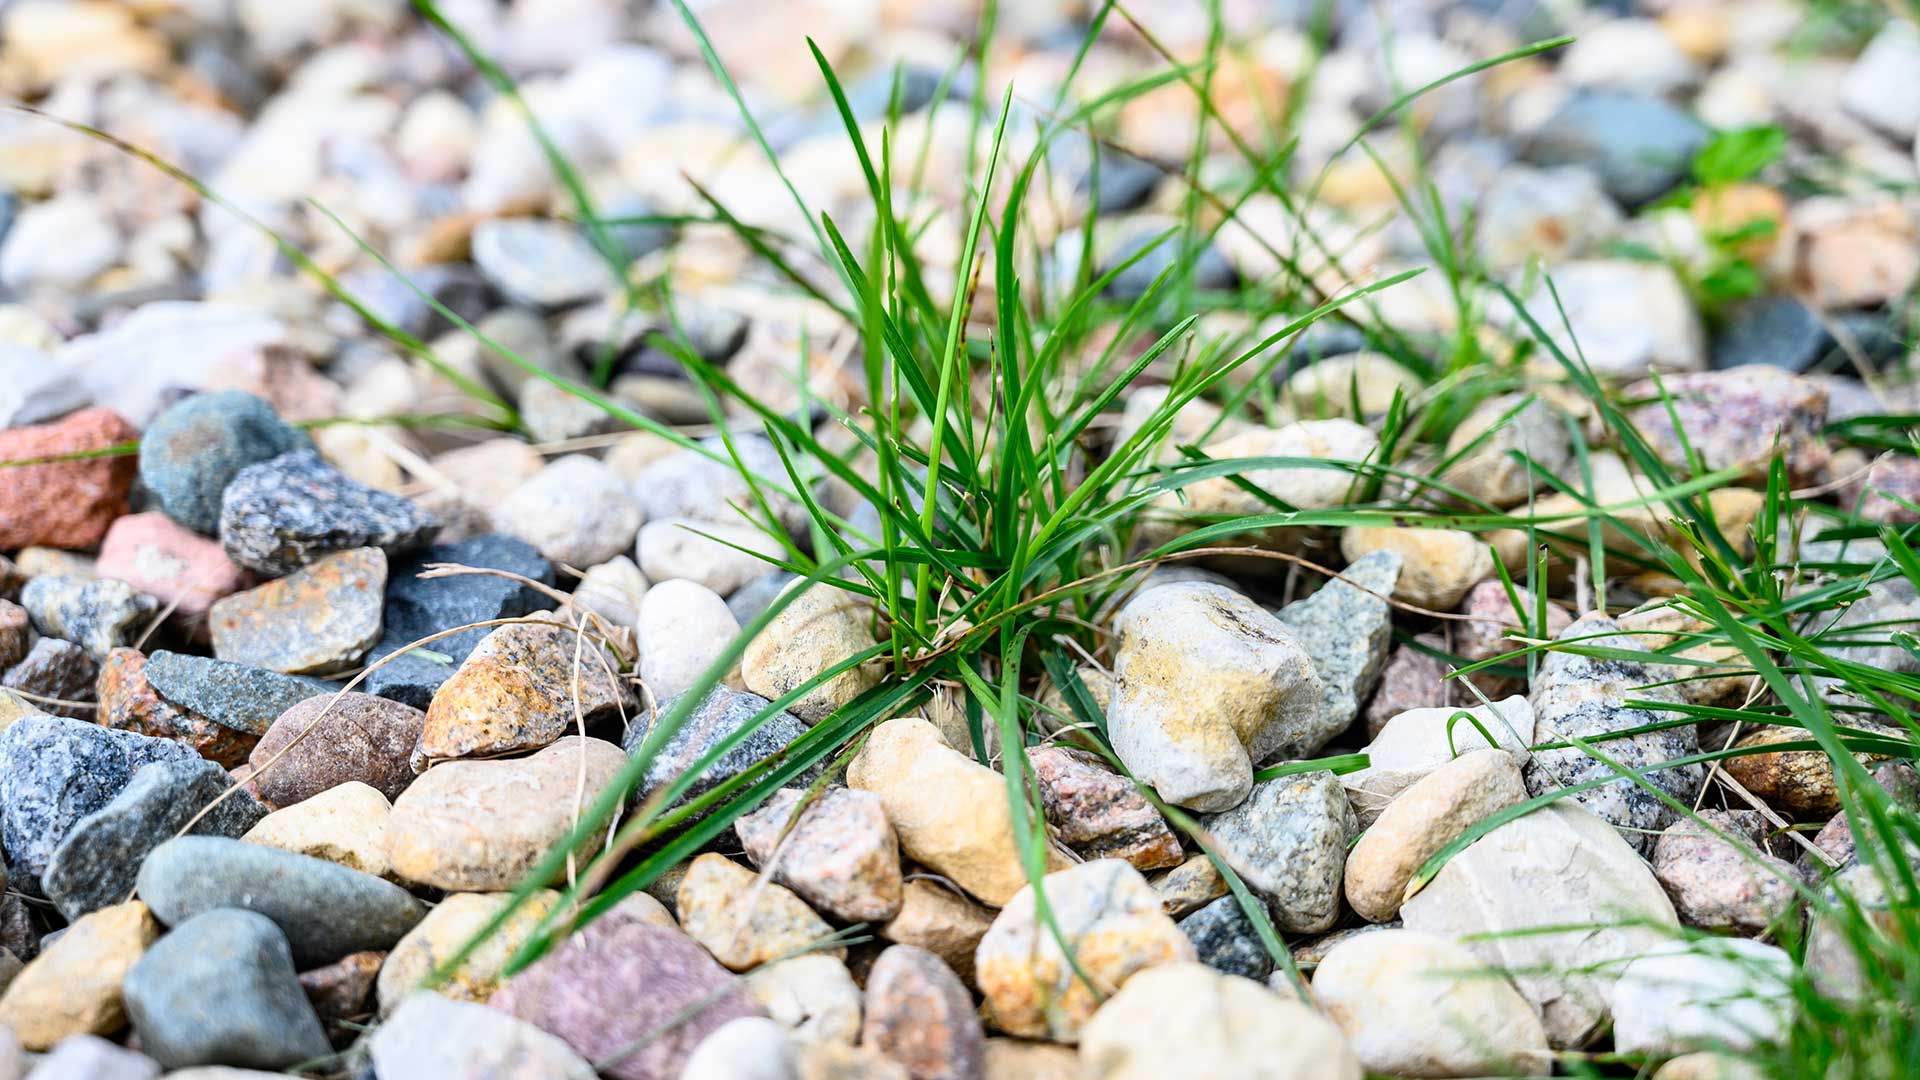 Weeds growing in a rock mulch landscape bed in Omaha, NE.